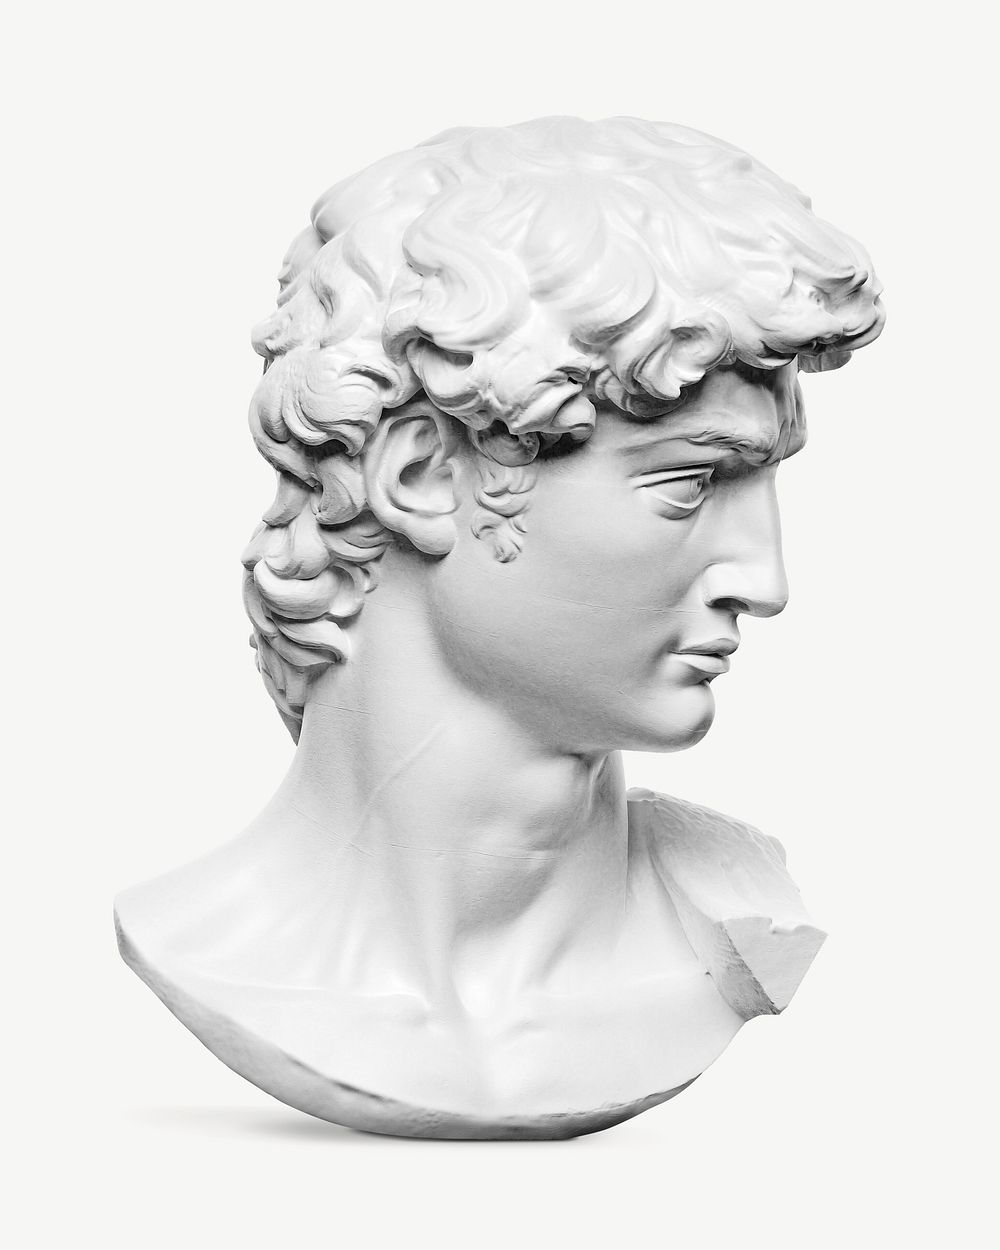 Michelangelo Buonarroti's David statue's head psd. Remixed by rawpixel.